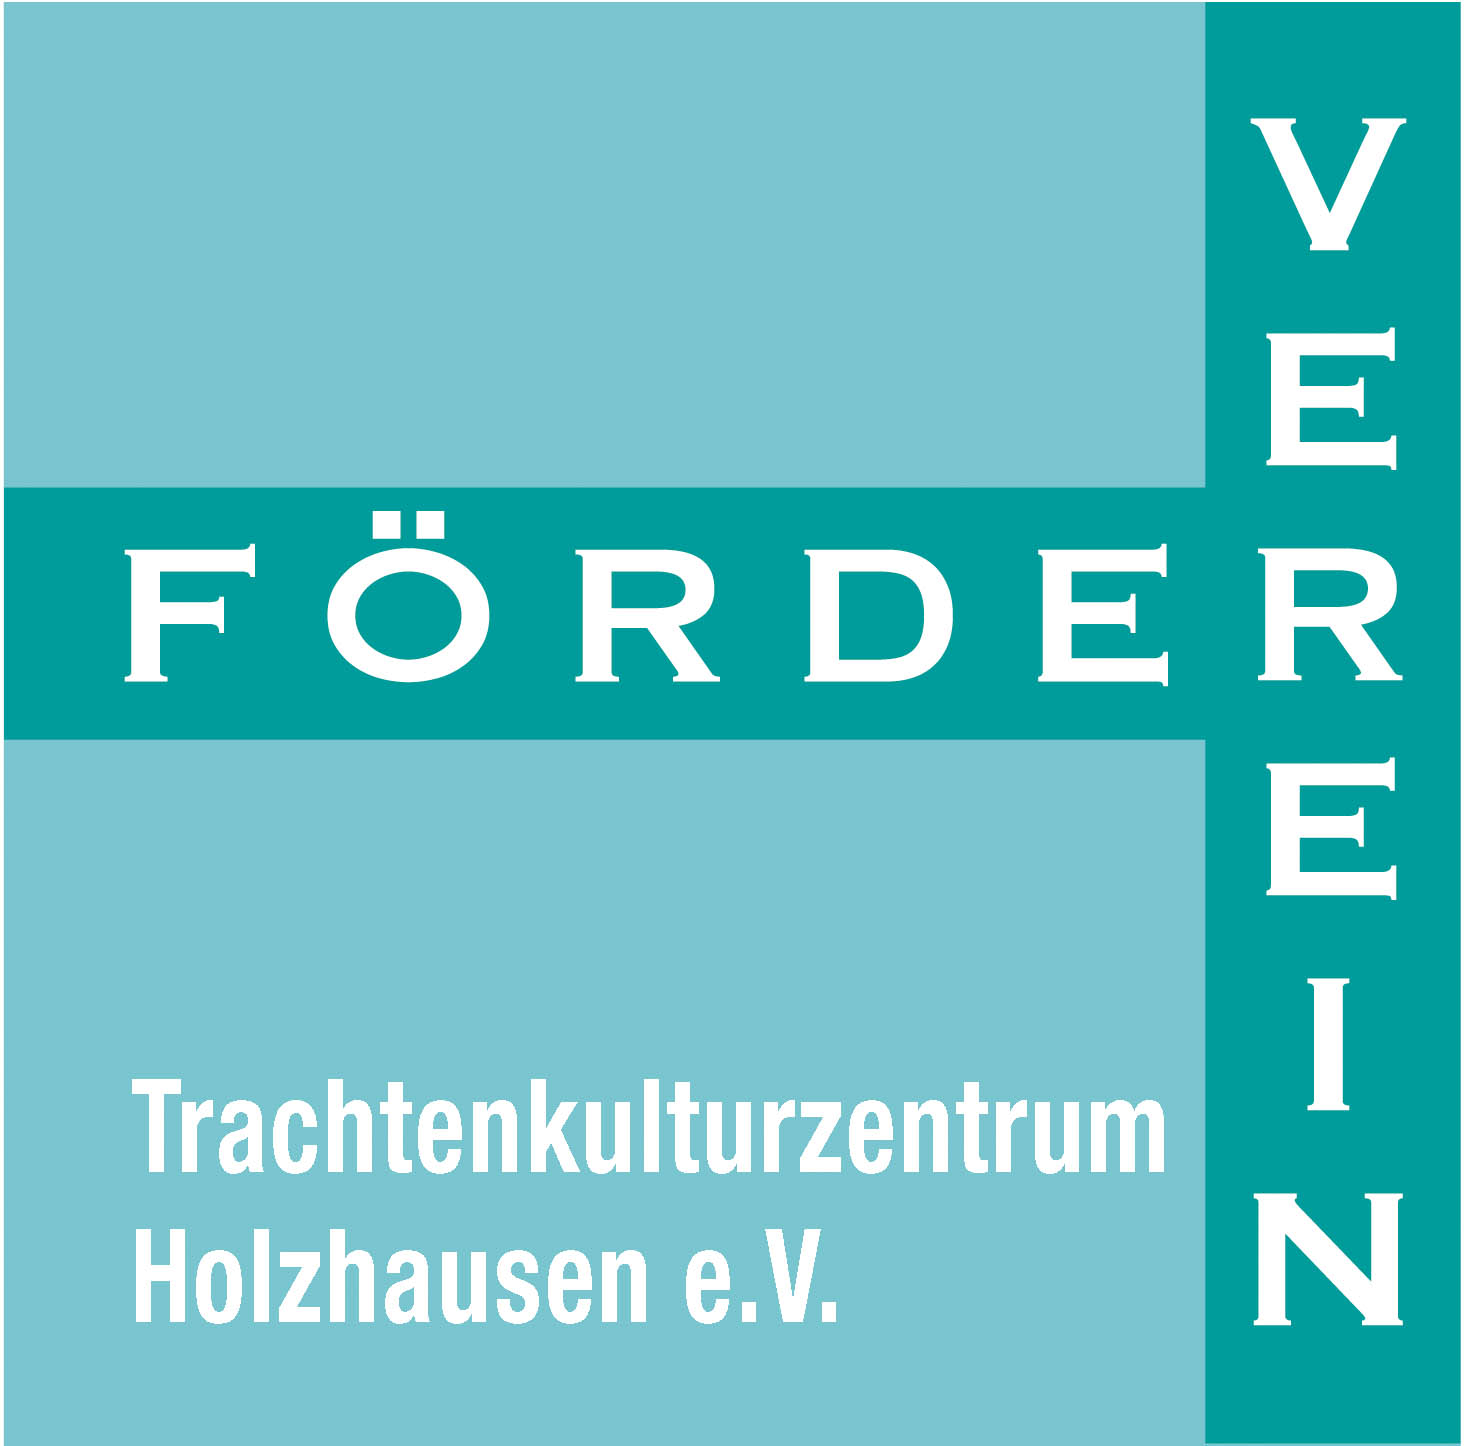 Föderverein Trachtenkulturzentrum e. V.